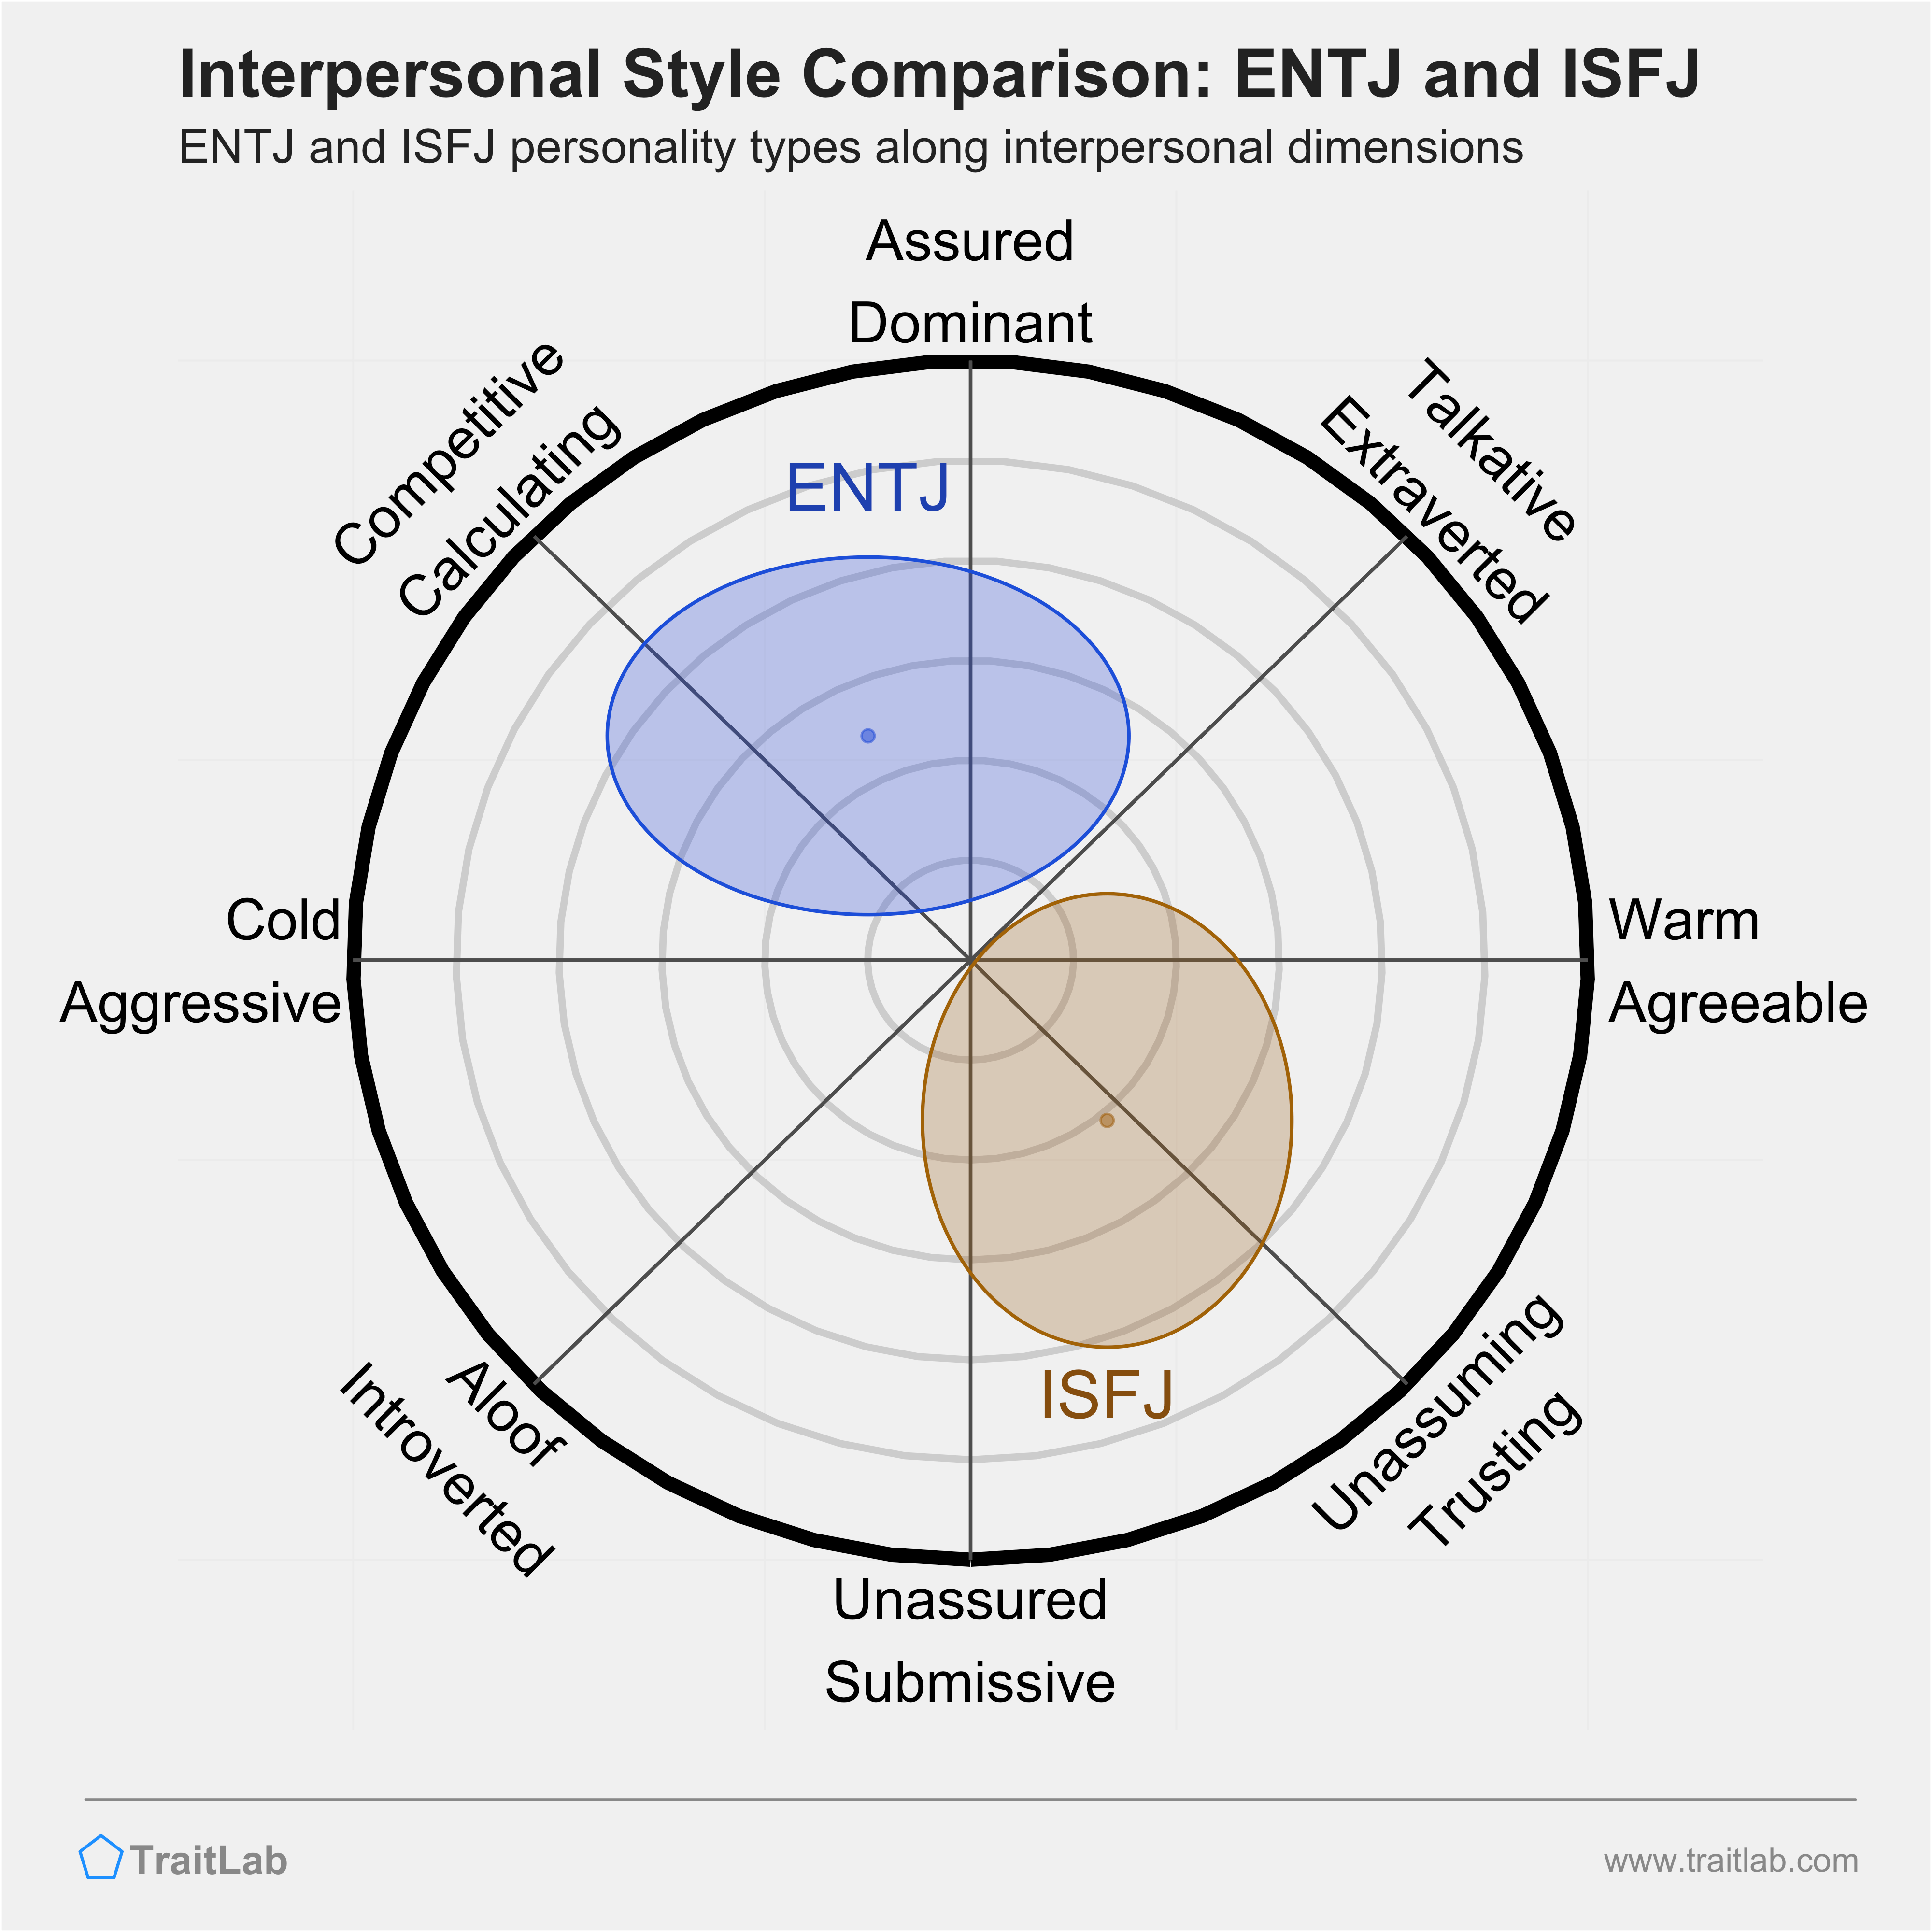 ENTJ and ISFJ comparison across interpersonal dimensions